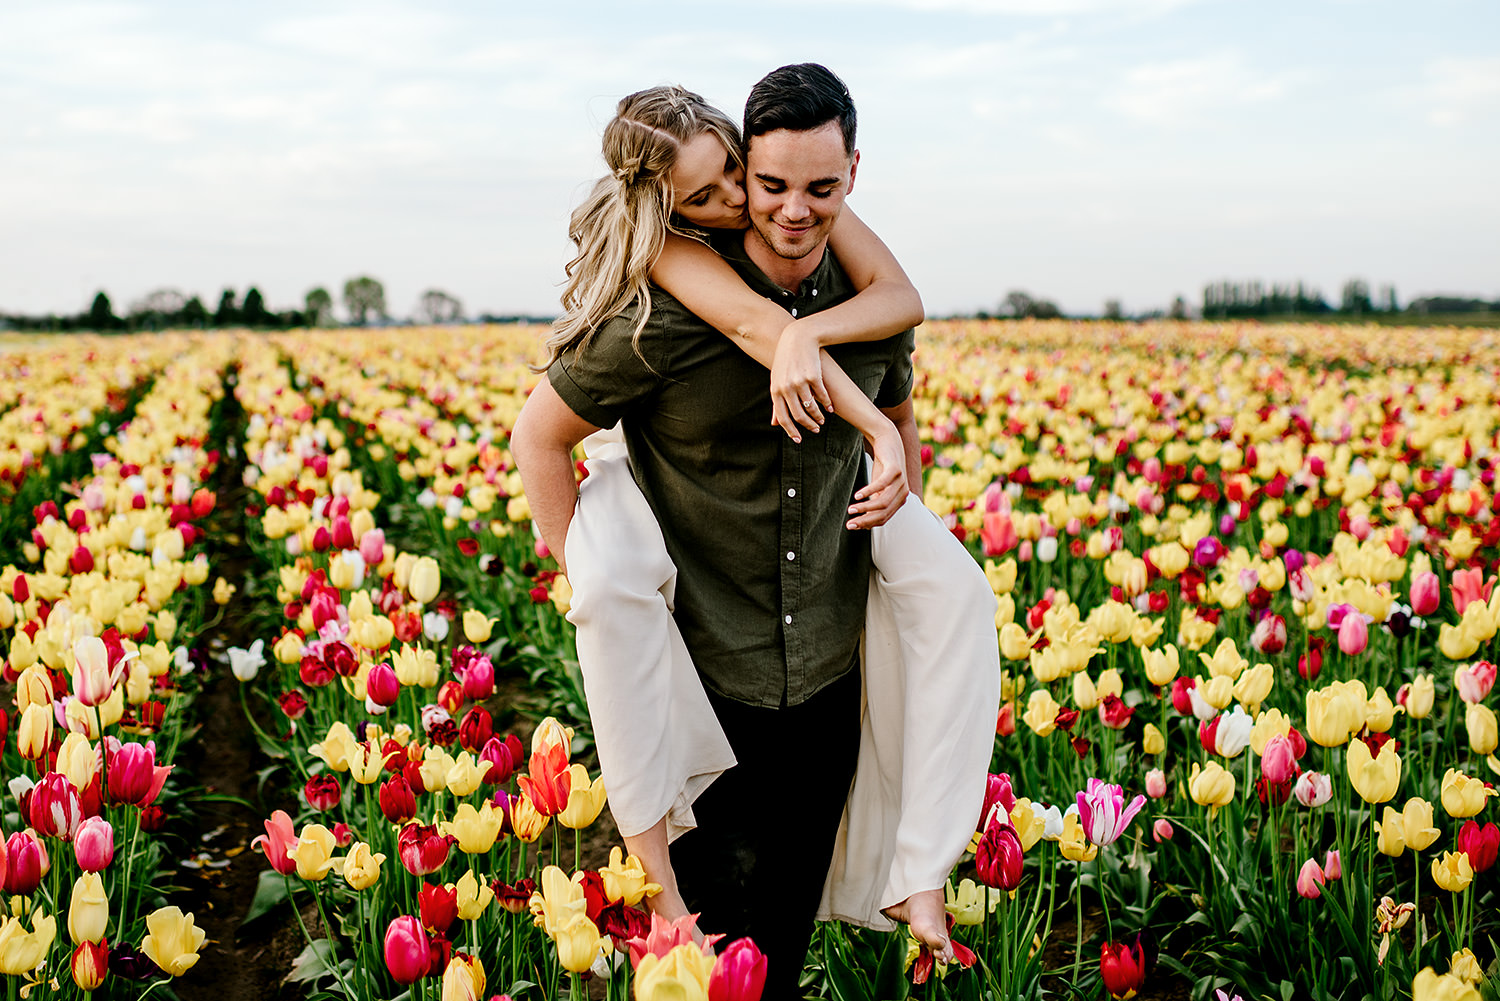 Tulip field engagement photo inspiration. // mysweetengagement.com